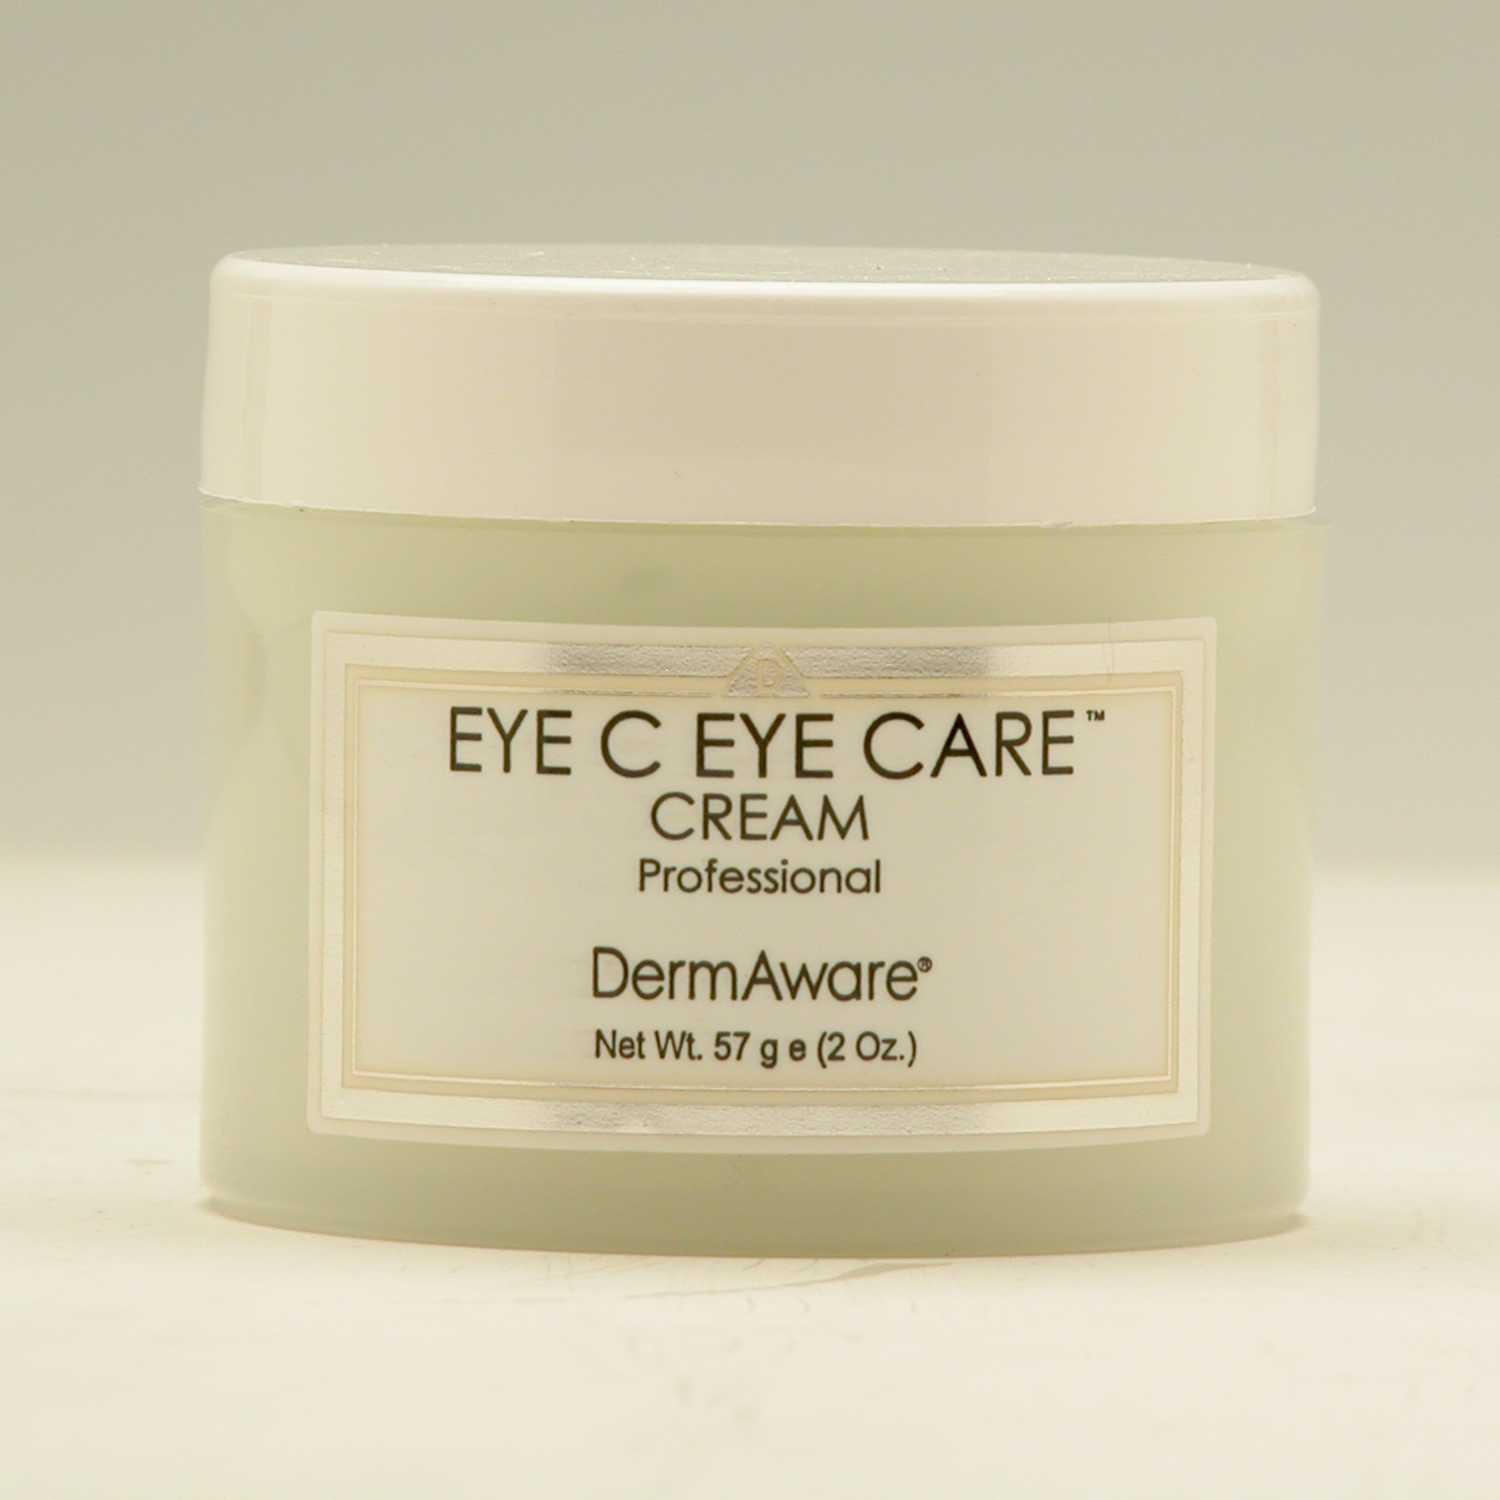 Eye C Eye Care Cream, 2 oz